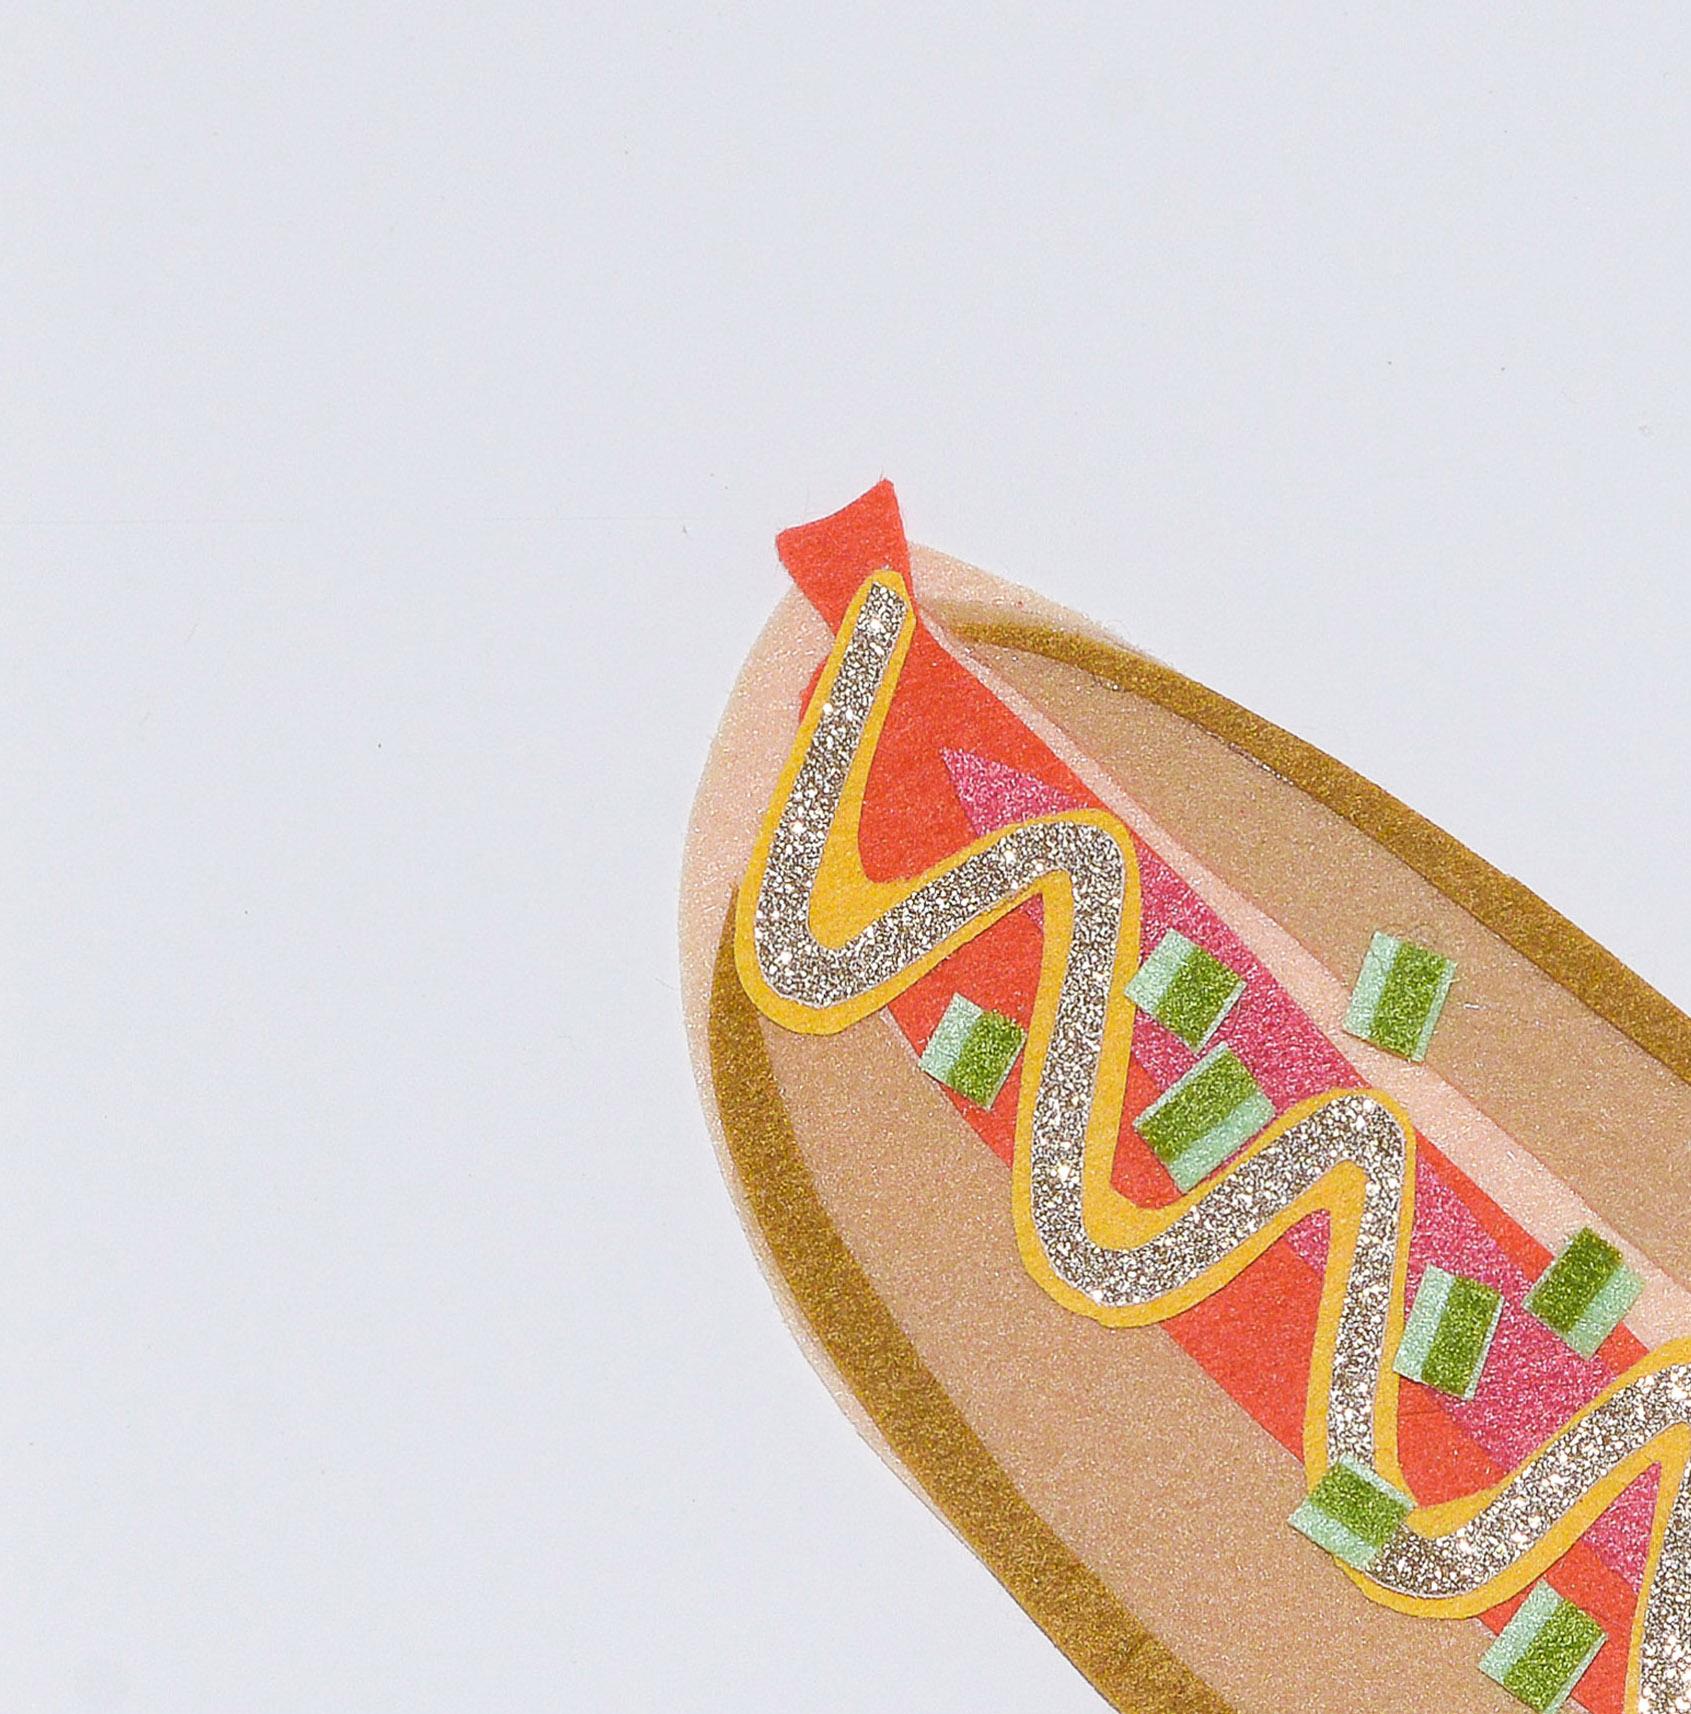 NYC Hotdog - Pop Art Art by Sam Sidney